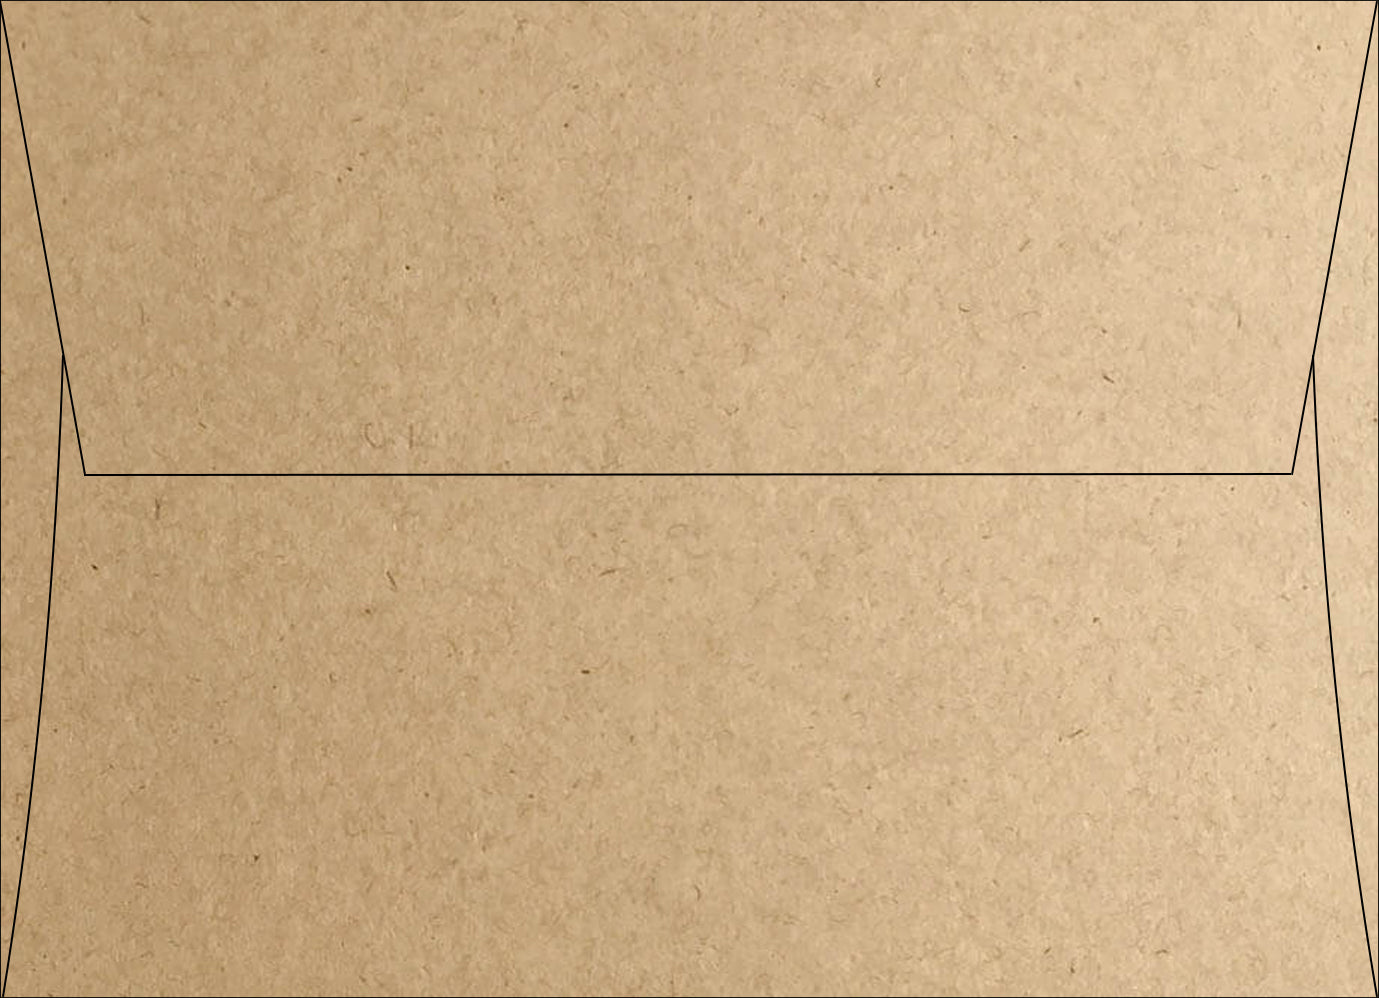 Kraft Envelope Samples